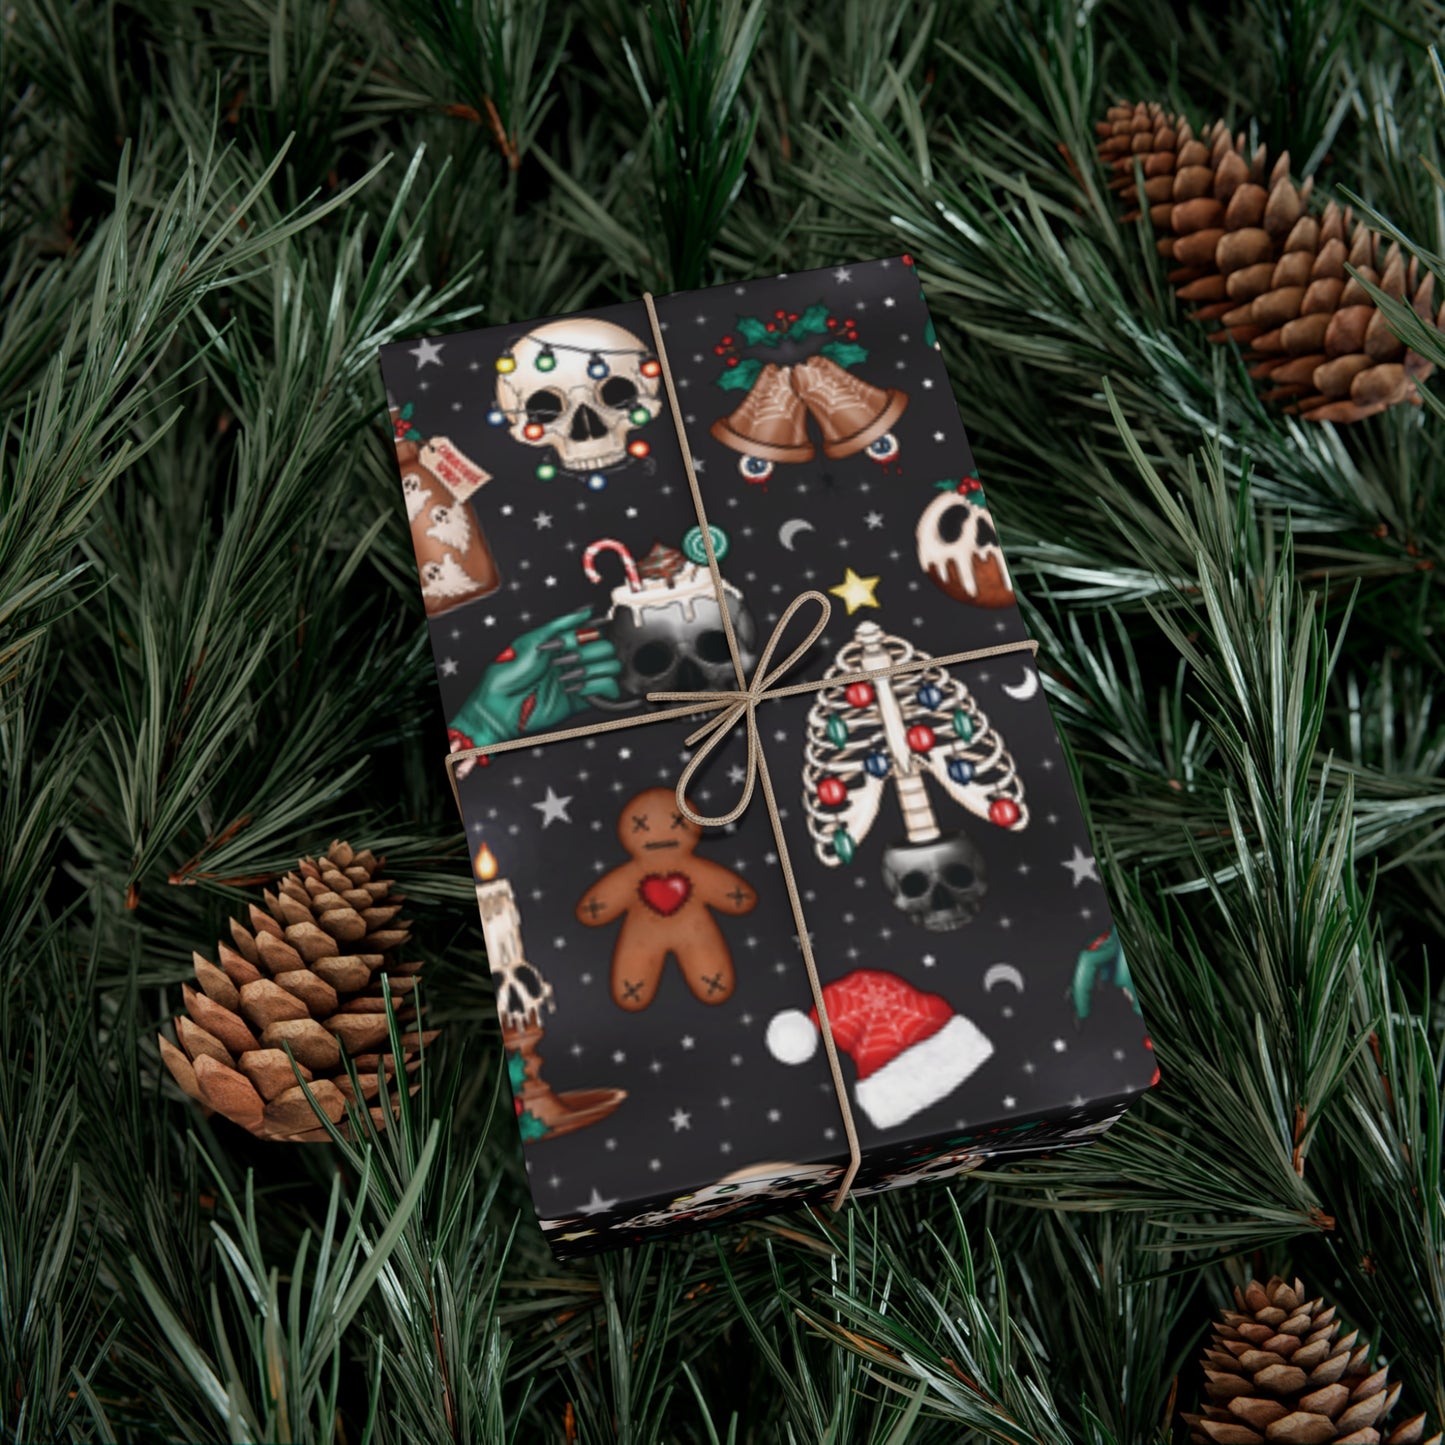 Kitschy Kawaii Goth Christmas, Creepy Cute Whimsigoth Creepmas Black Eco-Friendly Gift Wrap Paper